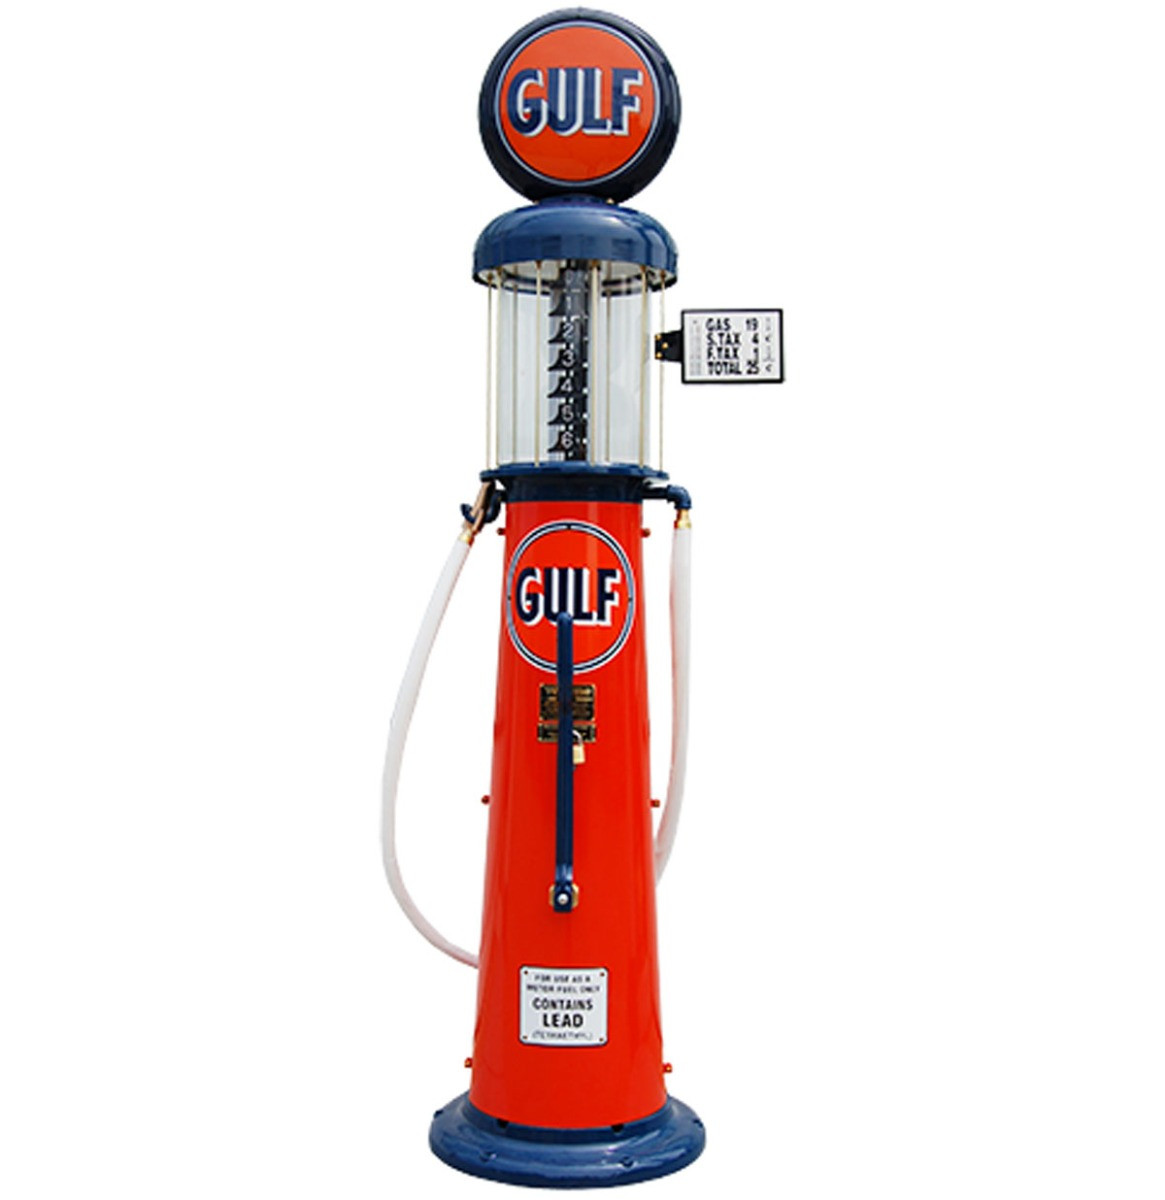 Wayne 615 Gulf 6 Gallon Benzinepomp - Oranje & Blauw - Reproductie